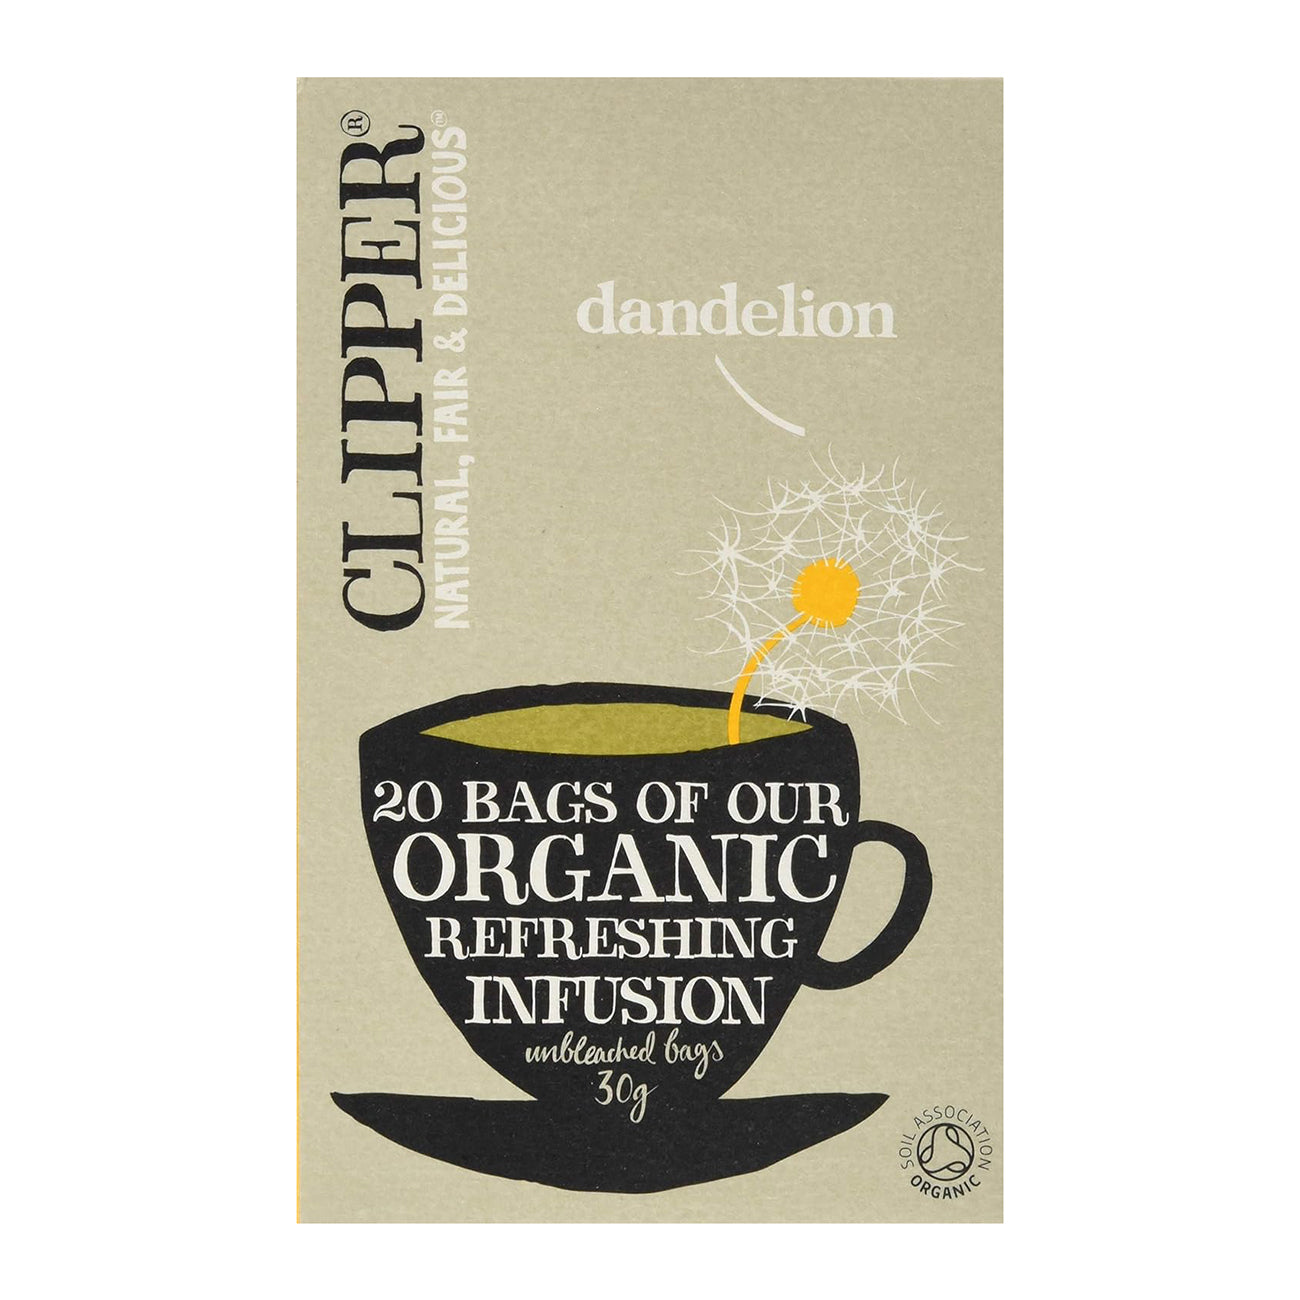 Dandelion Infusion 20 bags